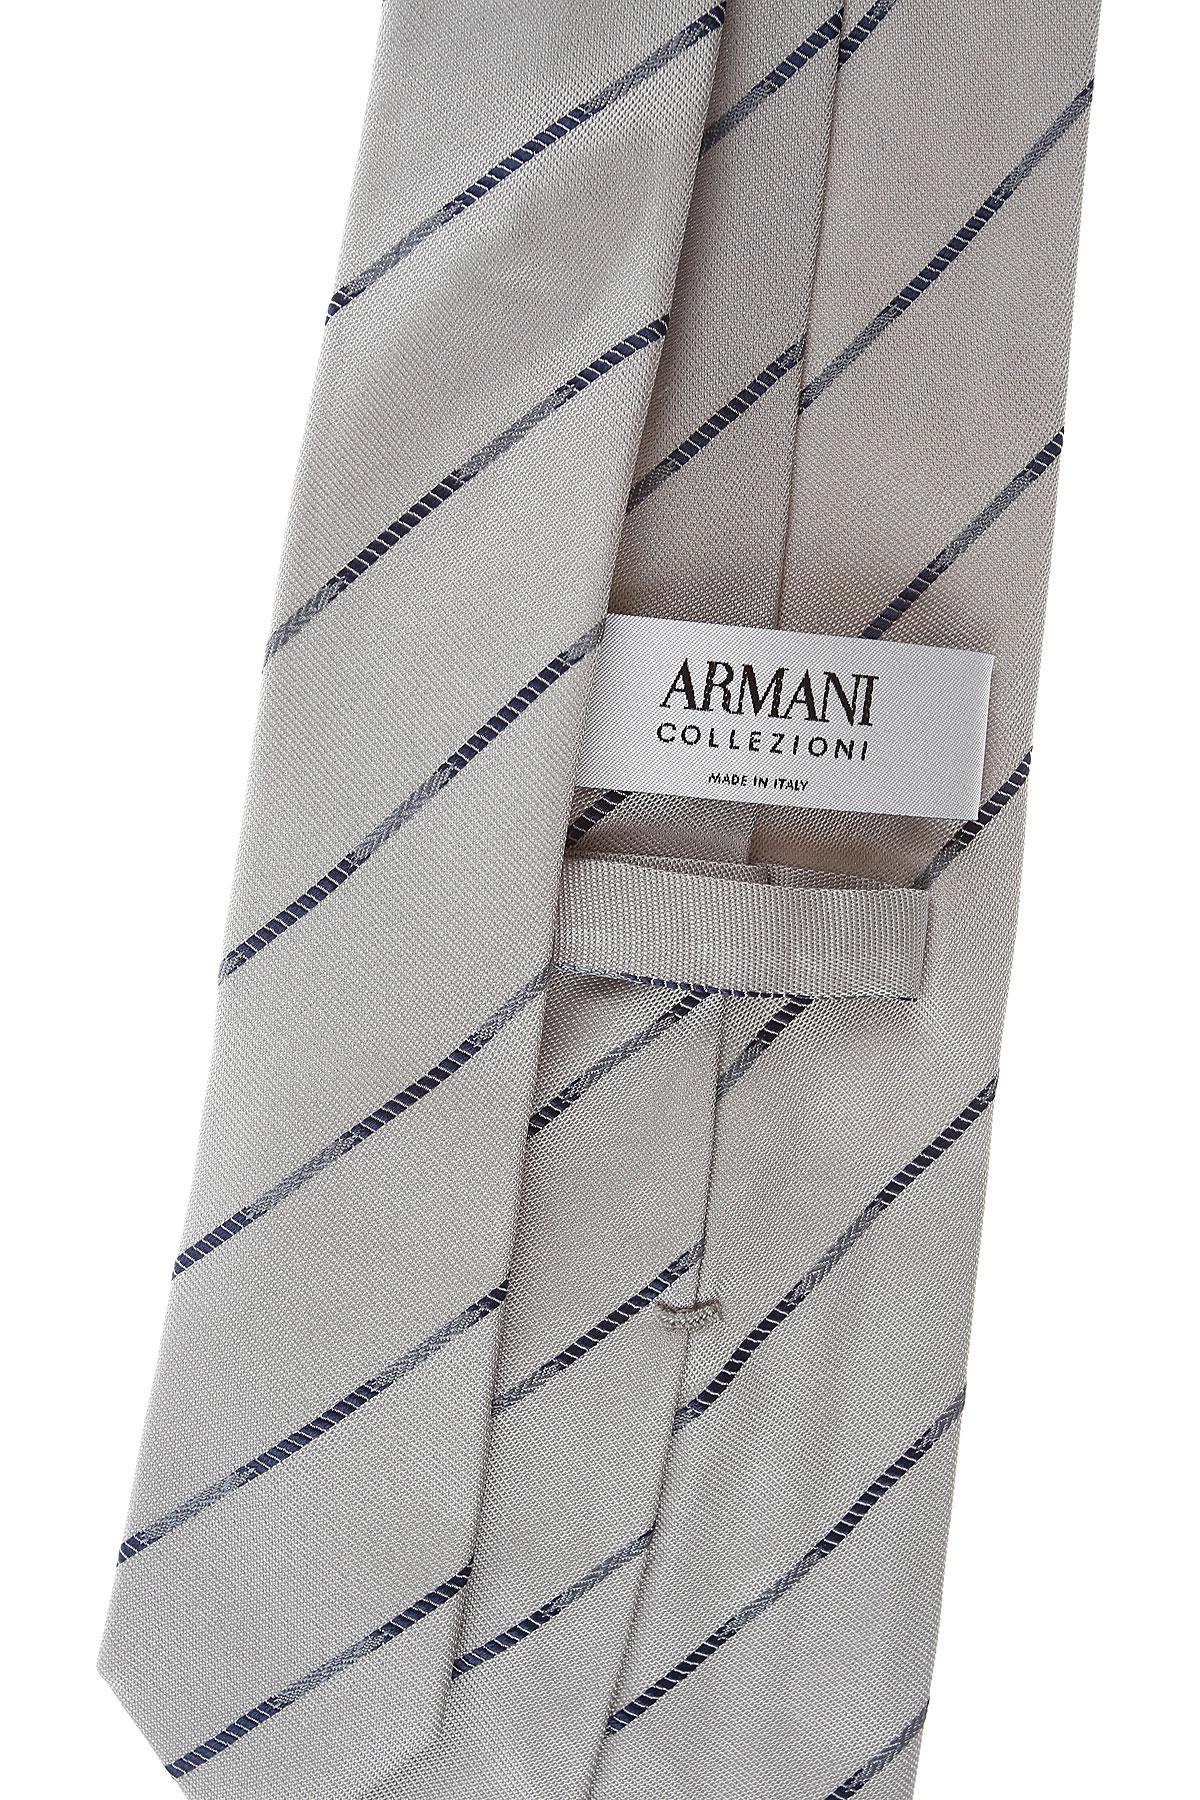 Giorgio Armani Silk Ties On Sale in Pearl Grey (Gray) for Men - Lyst